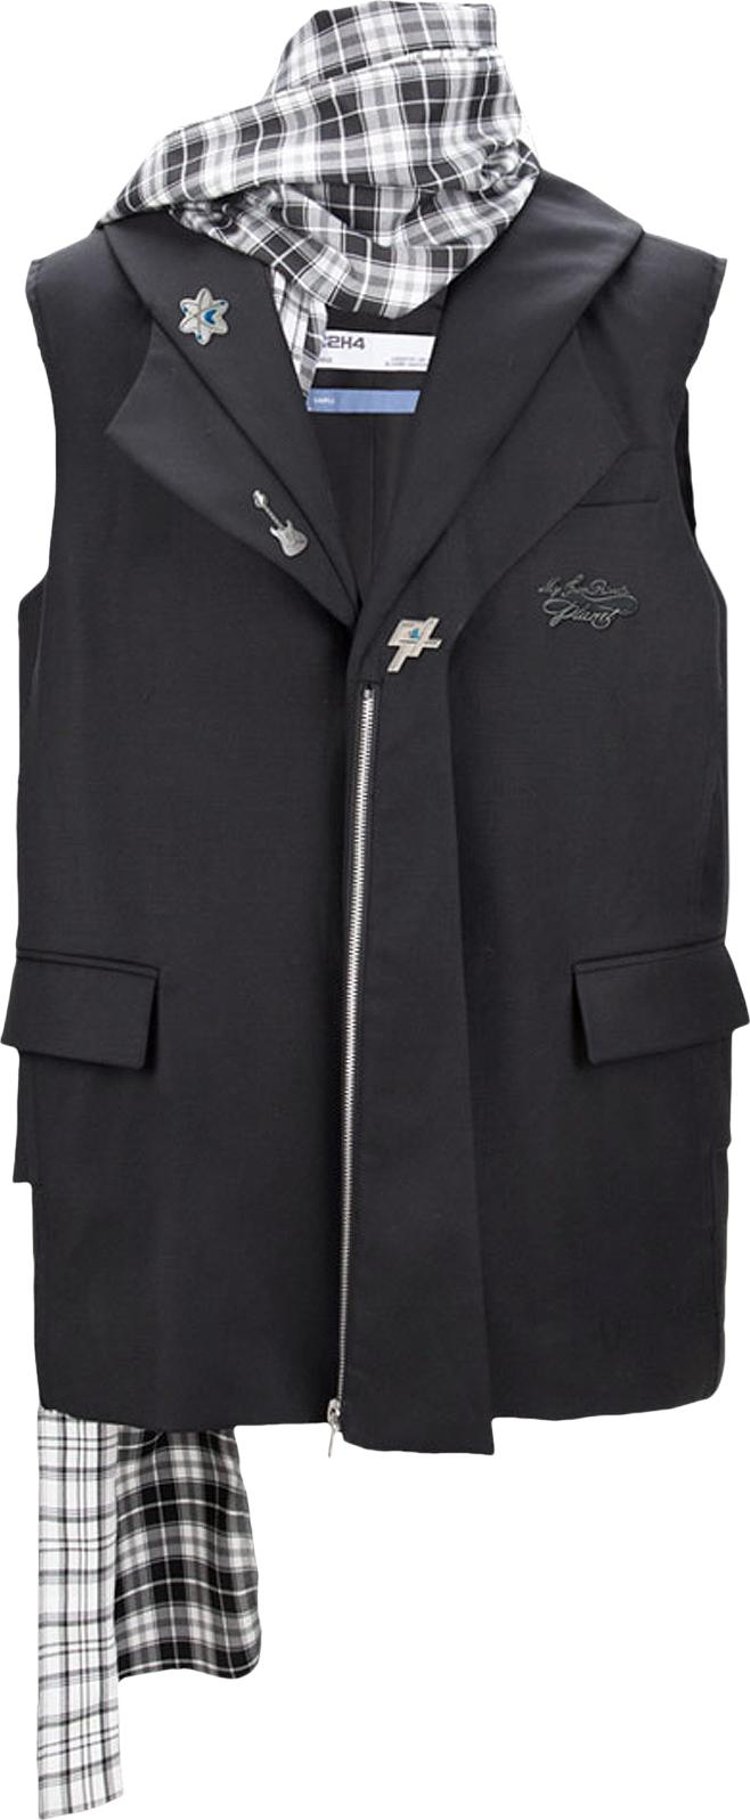 C2H4 Alternate Scarf Variant Tailored Sleeveless Jacket 'Solemn Black'